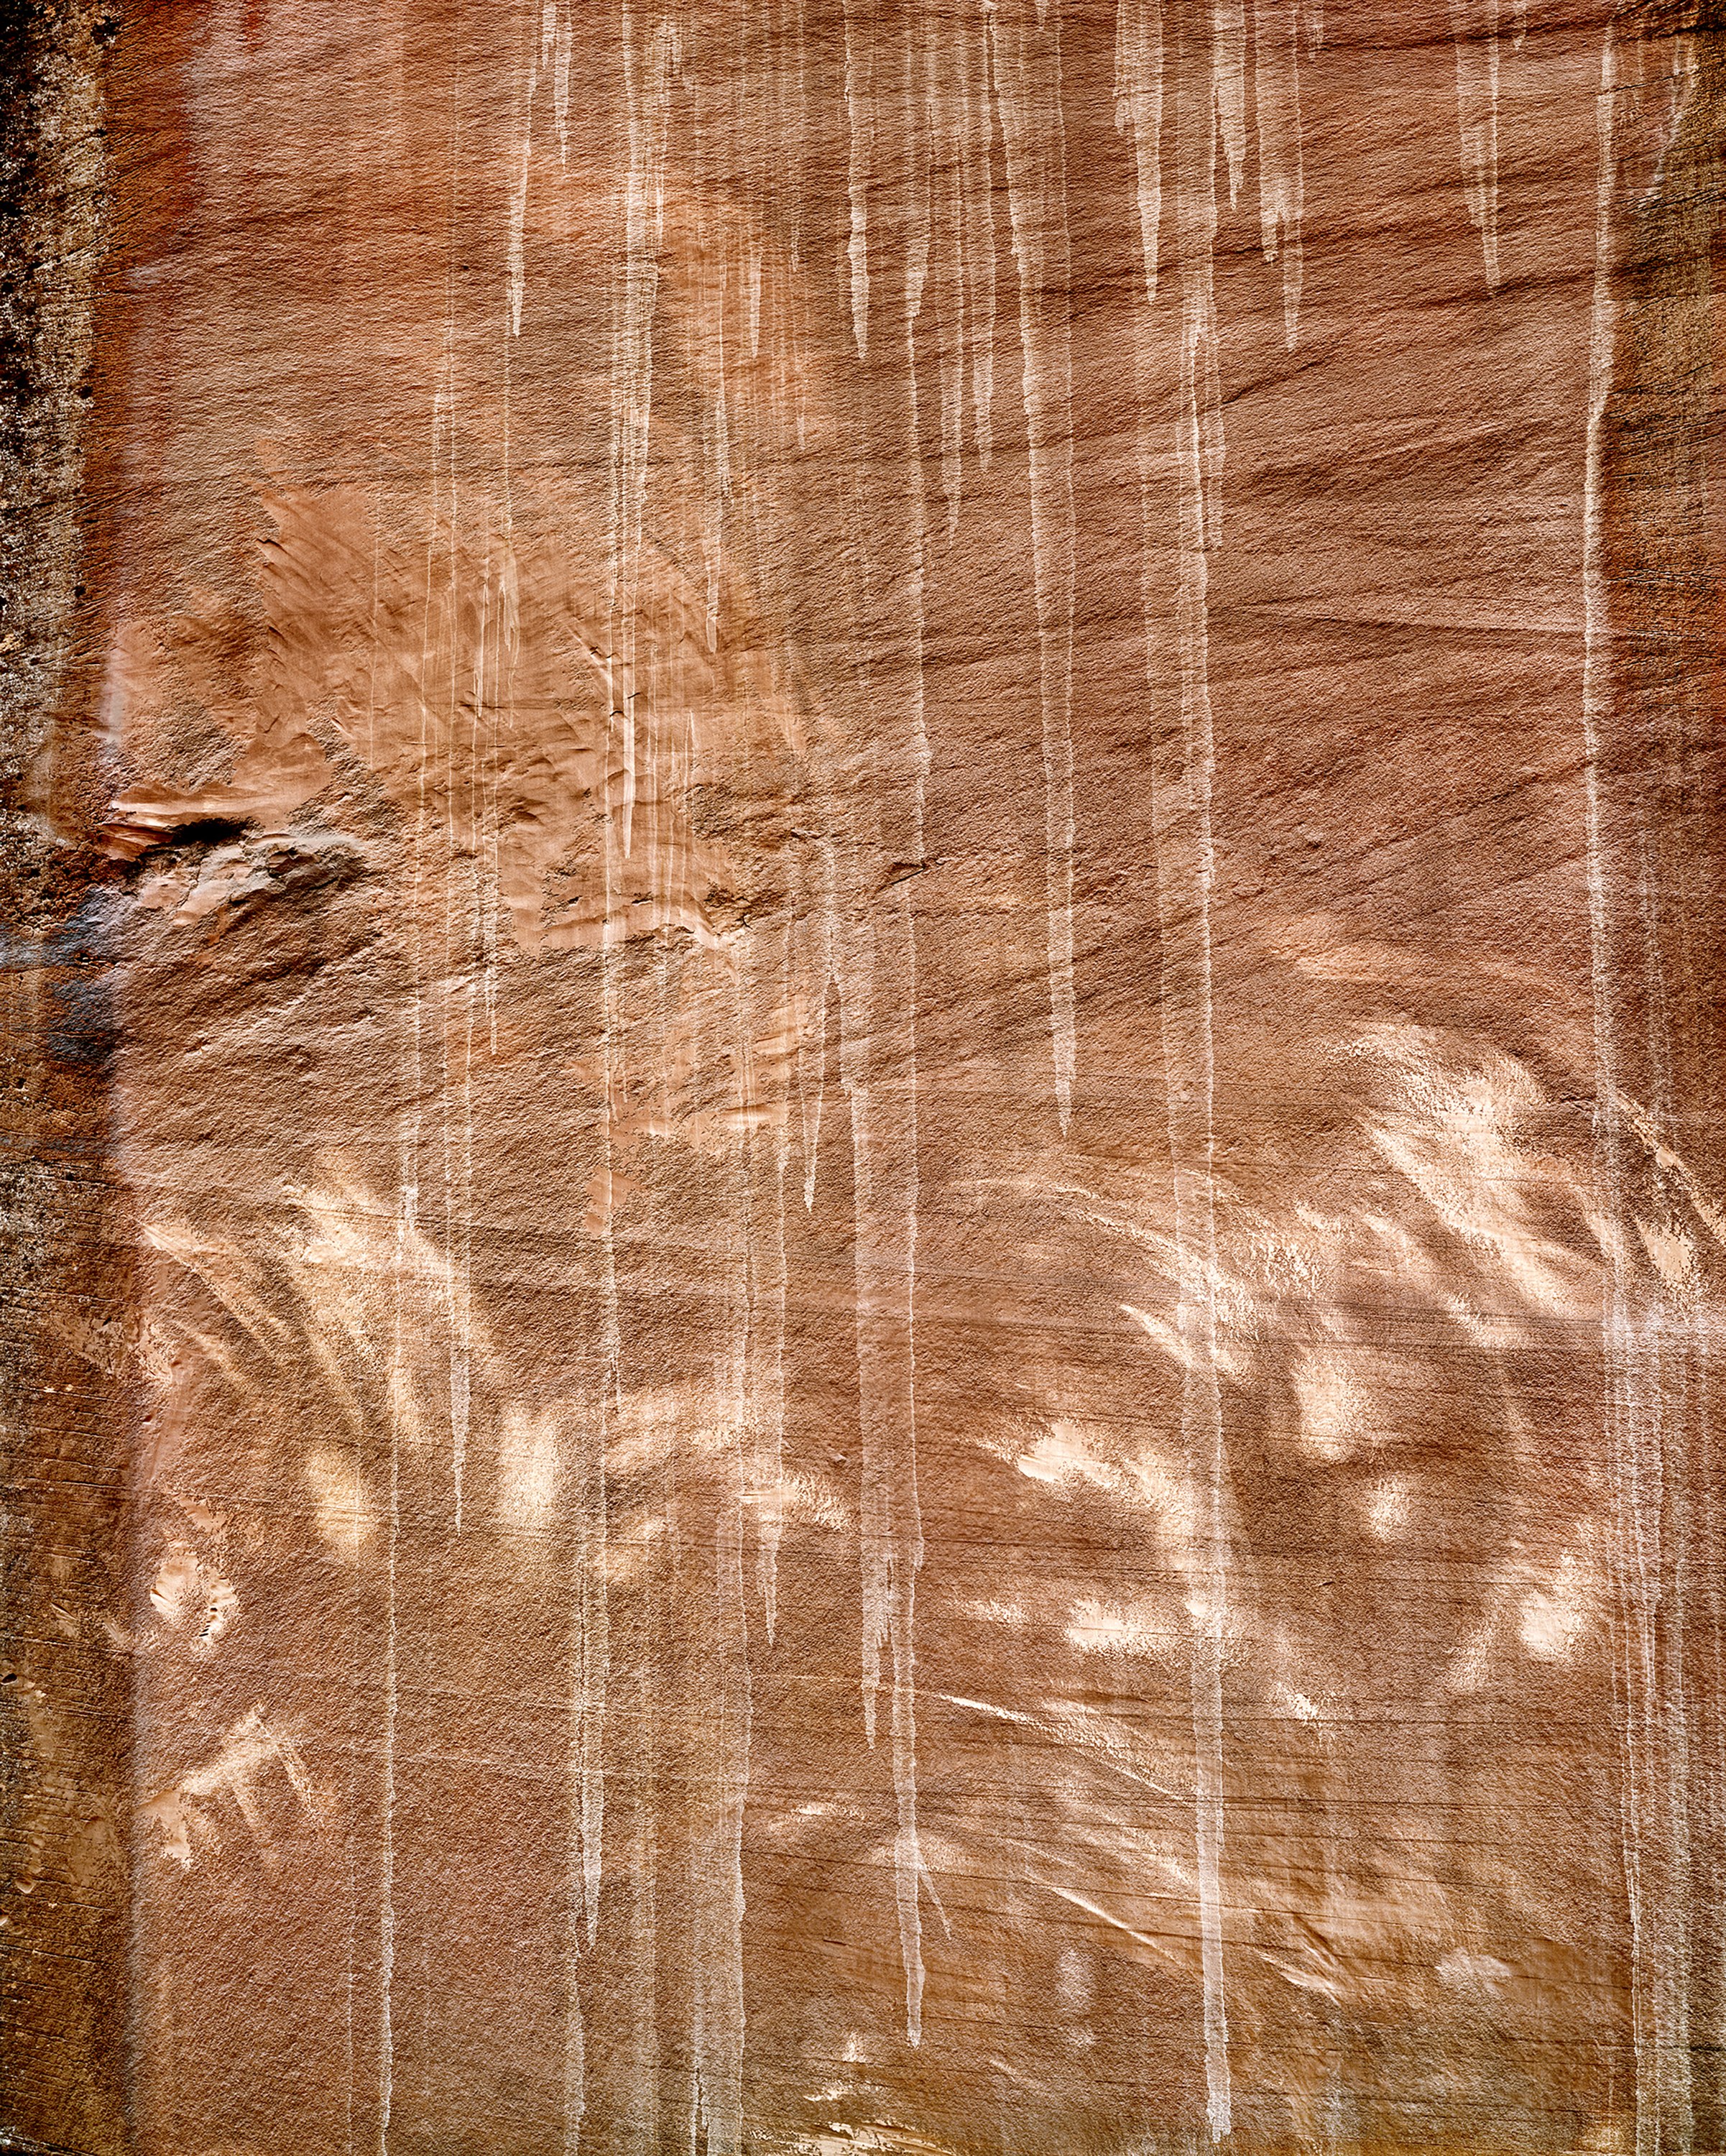 Tree Rubbings, Choprock Canyon, Escalante River, Utah